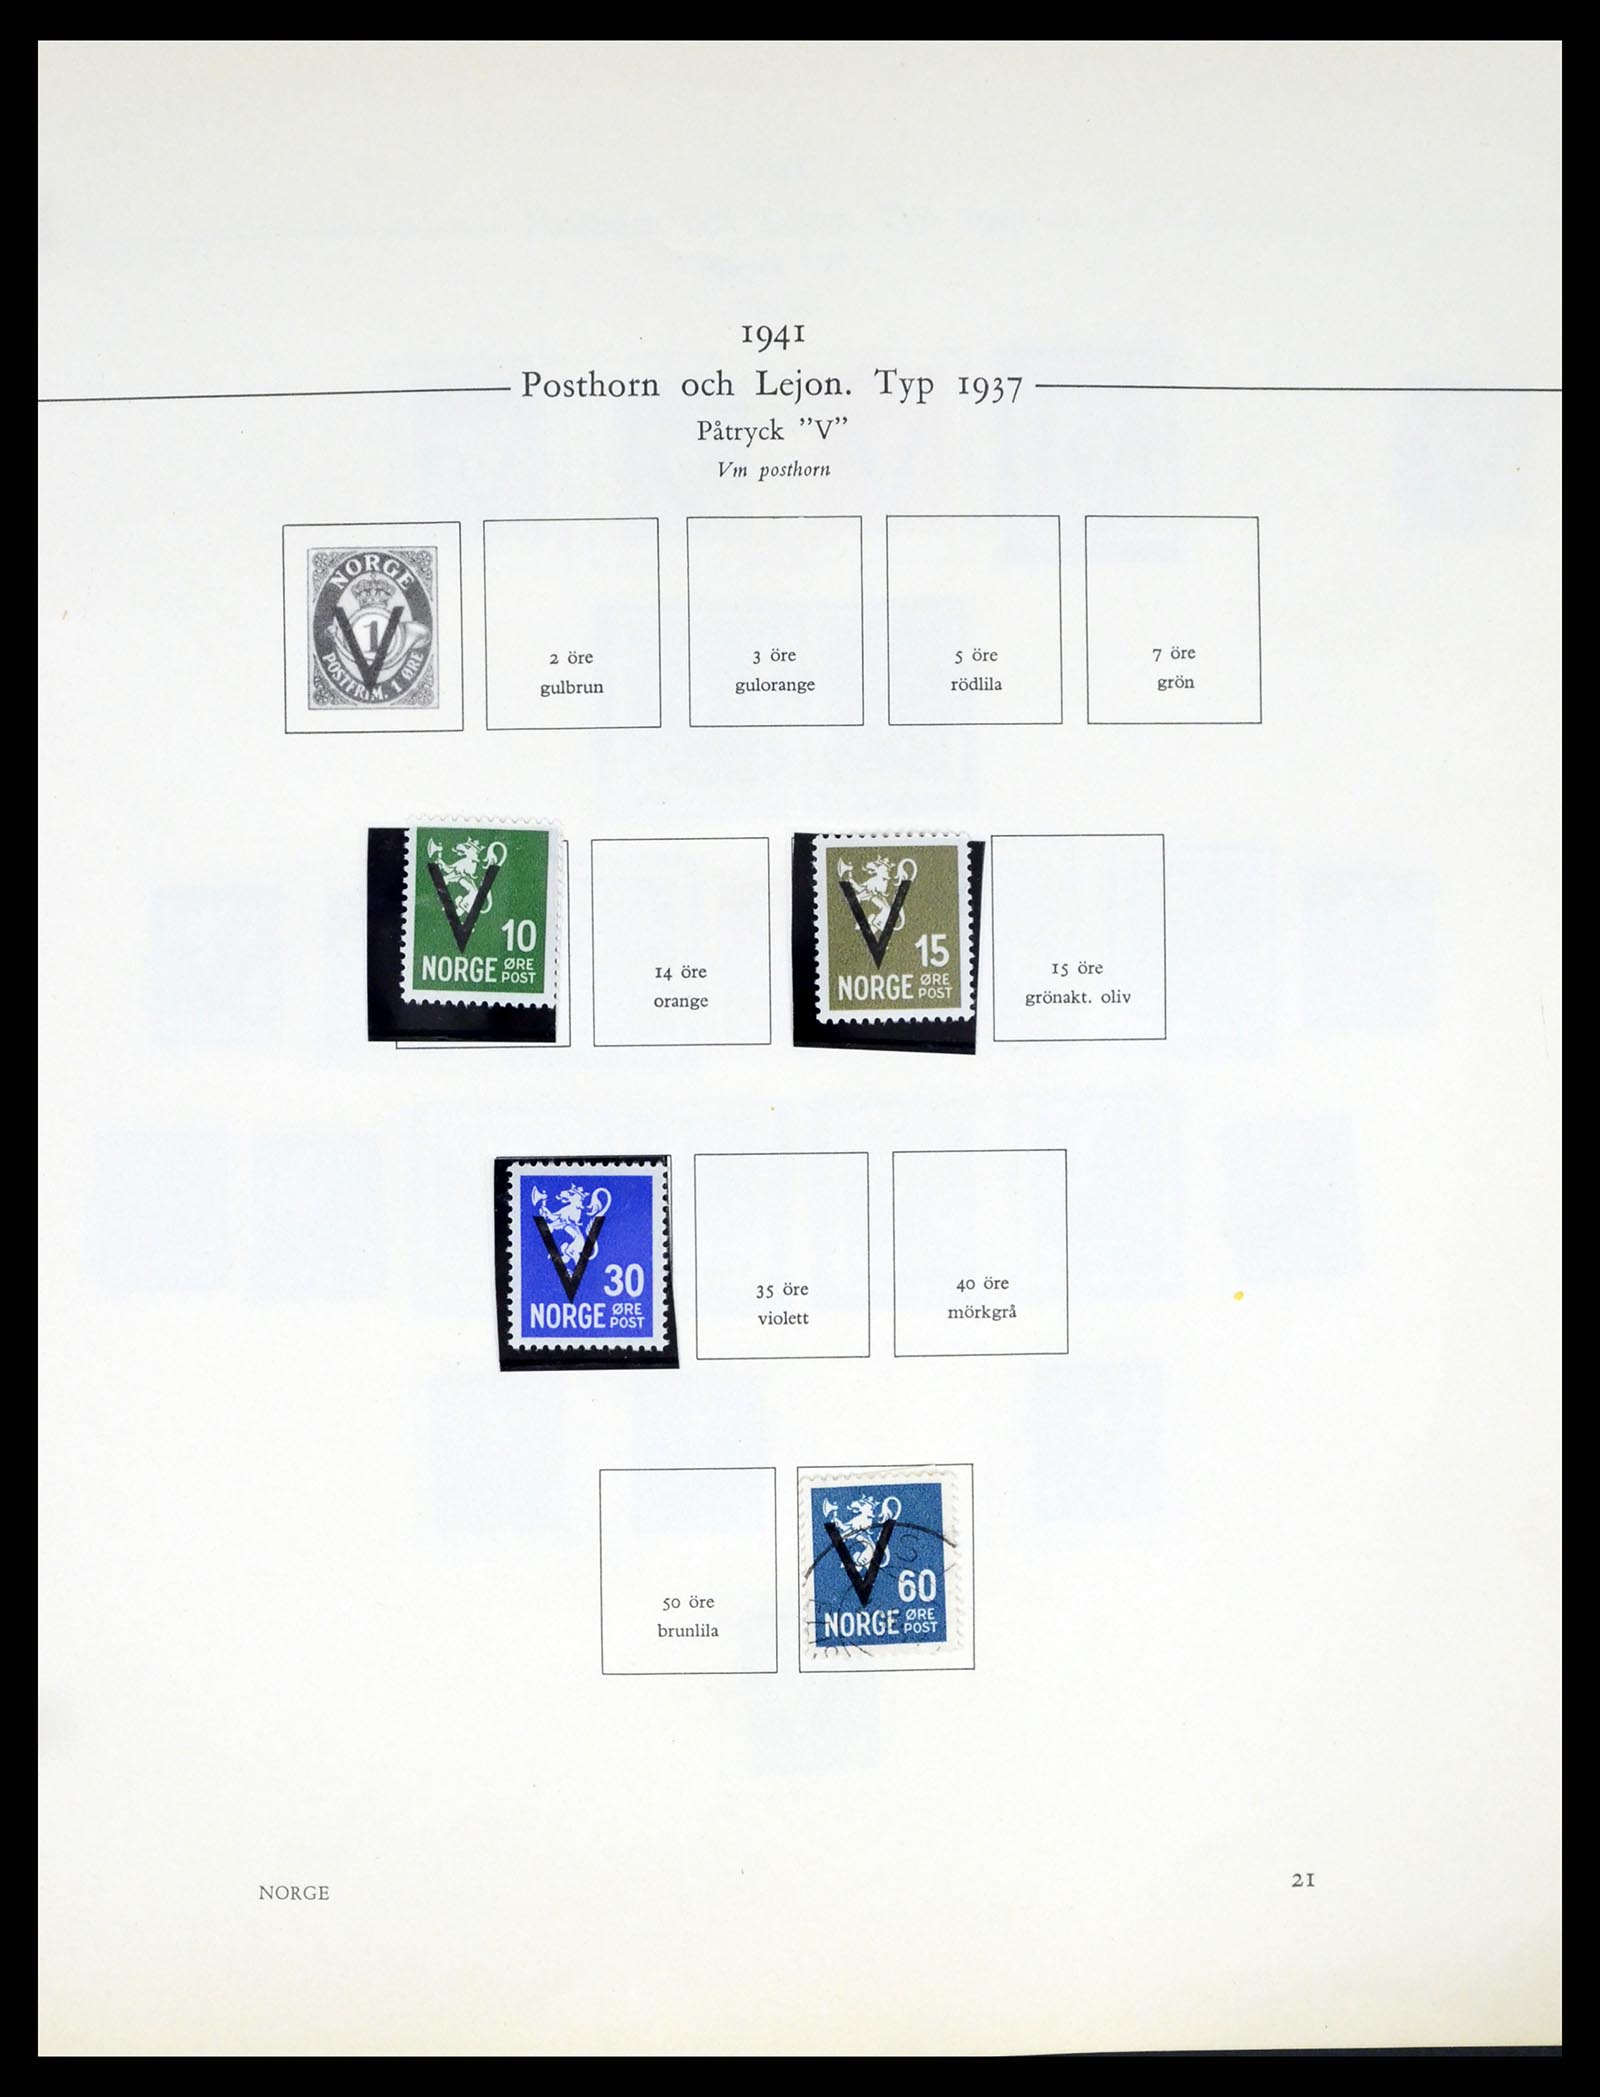 37387 021 - Stamp collection 37387 Scandinavia 1851-1960.